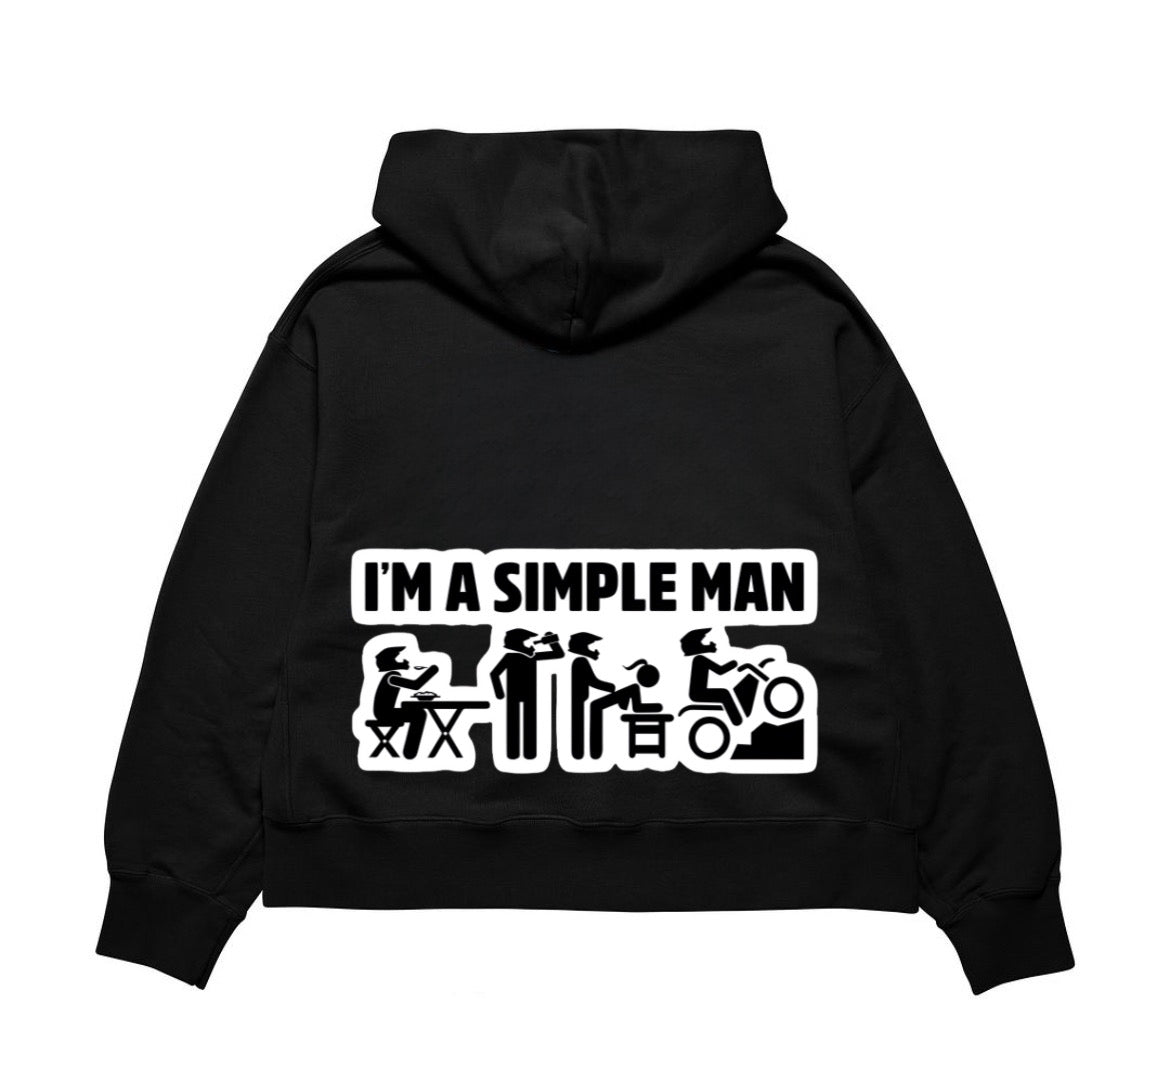 I AM SIMPLE MAN